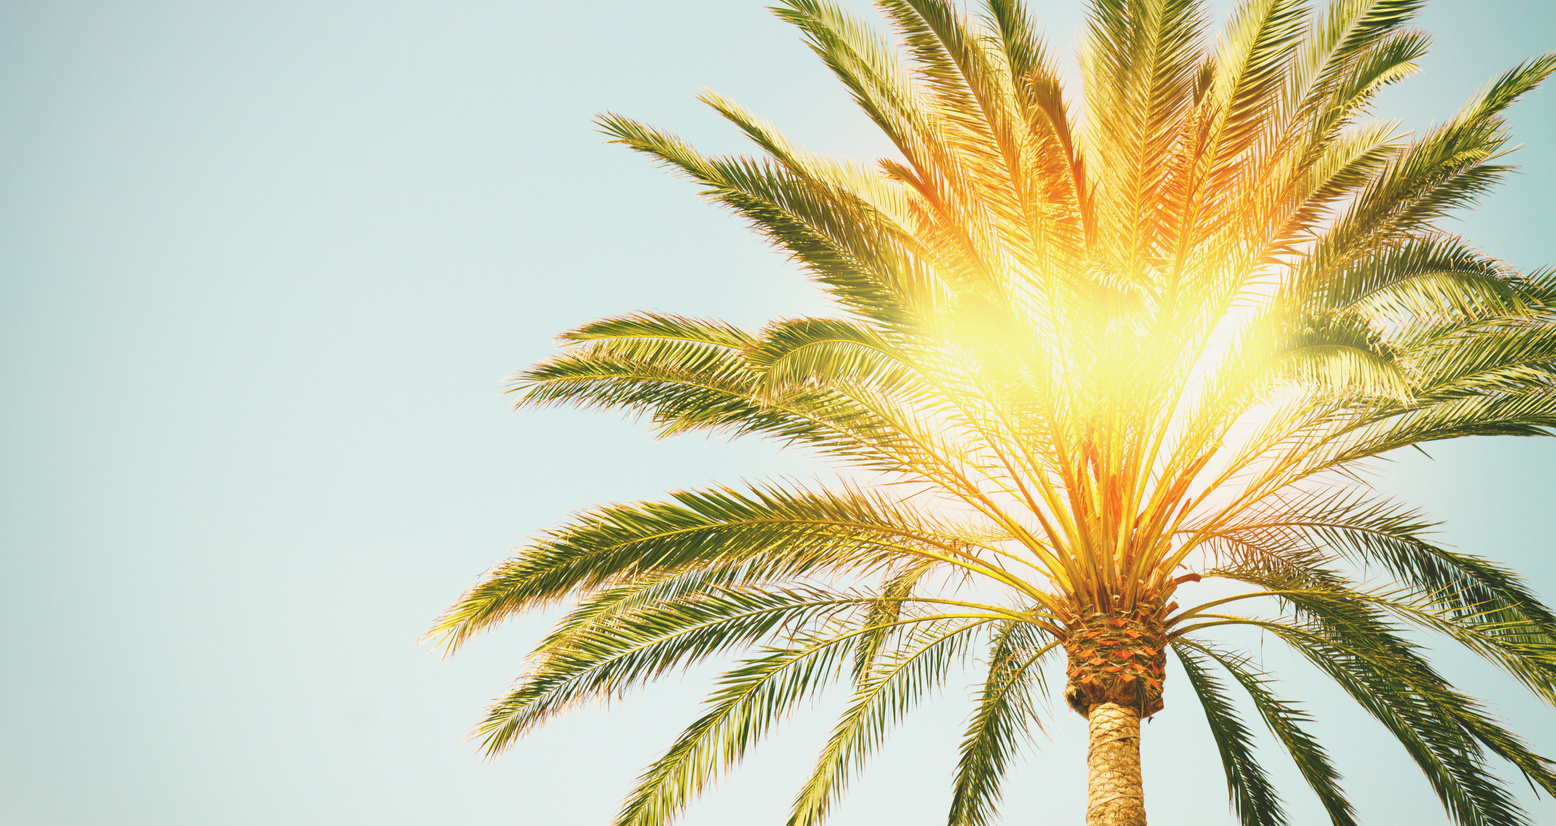 Palm Tree with Sunshine